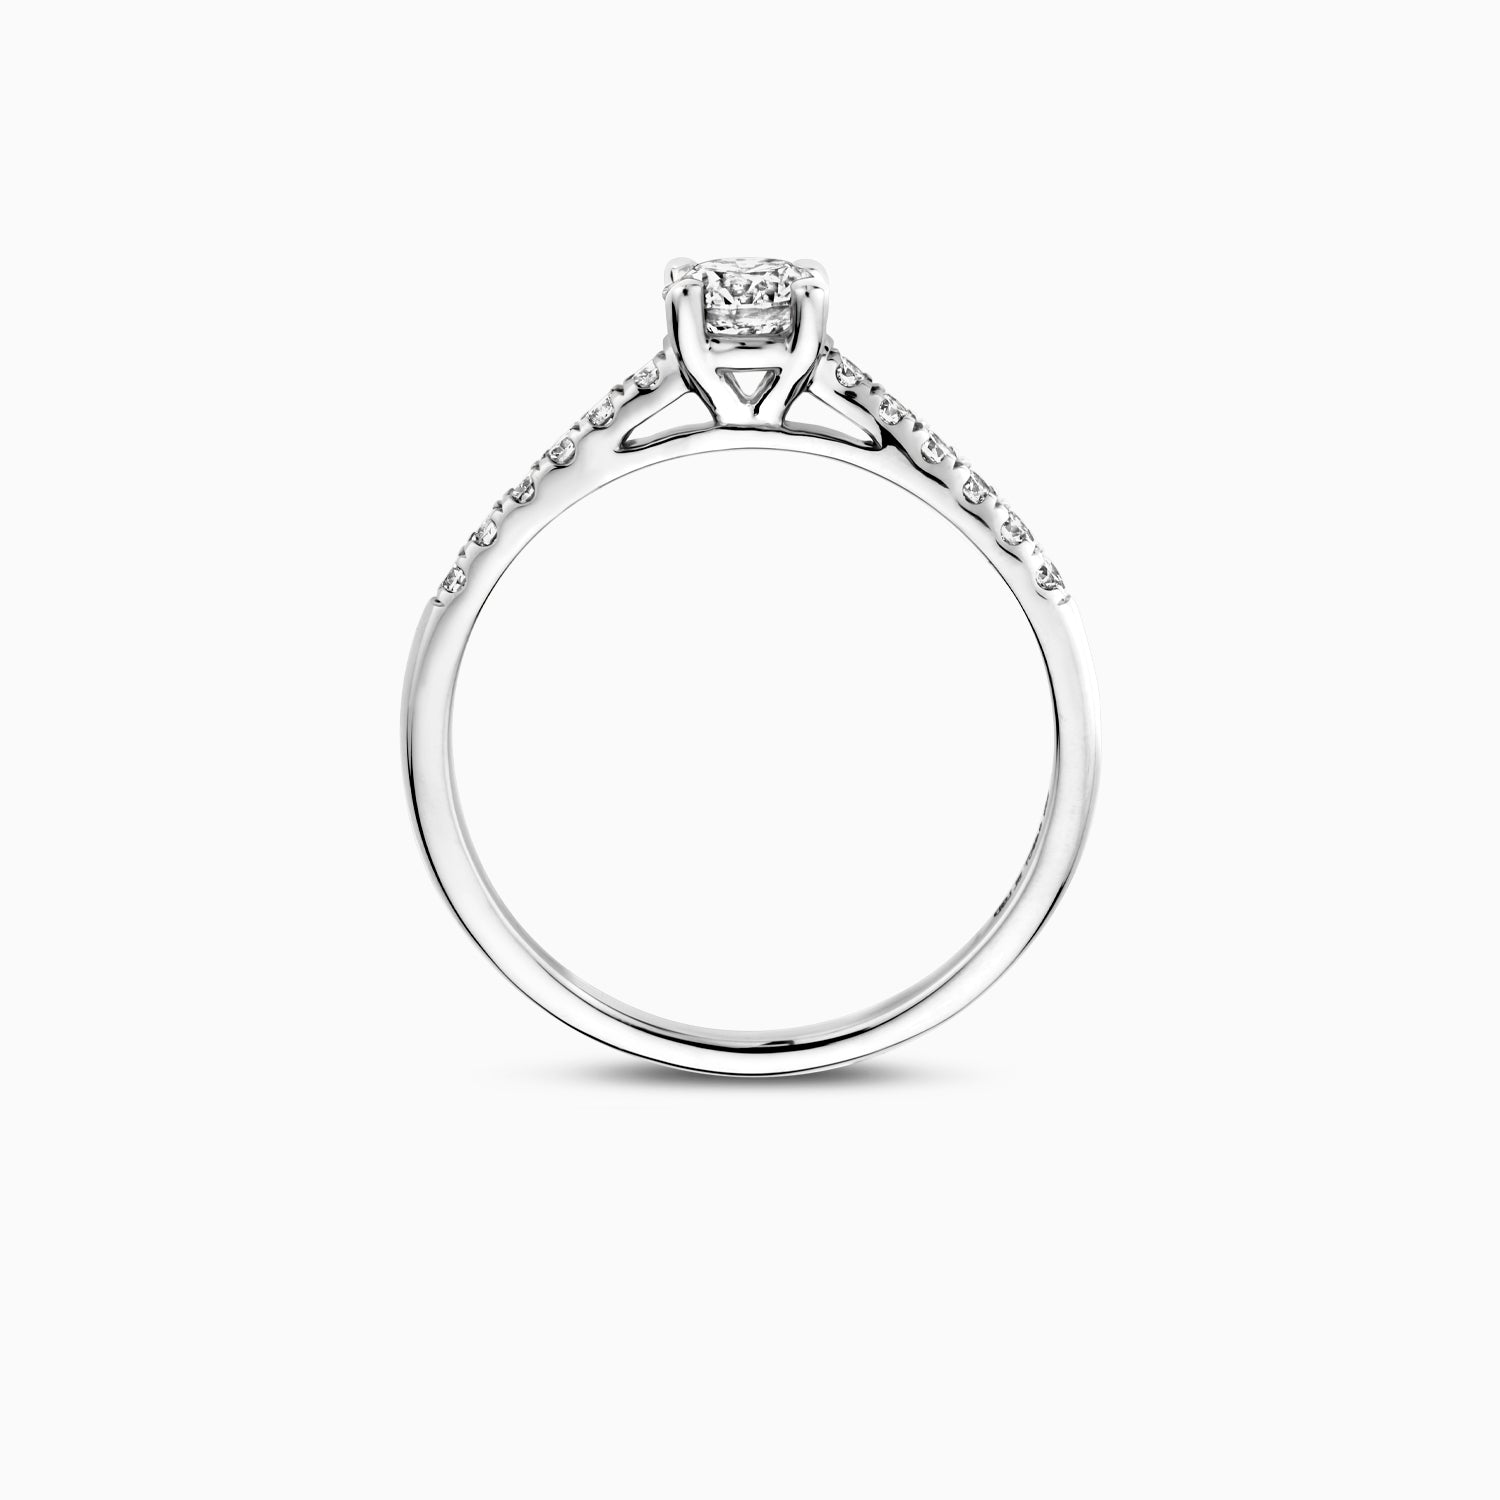 Lab diamonds ring LG1006W - 14k White gold